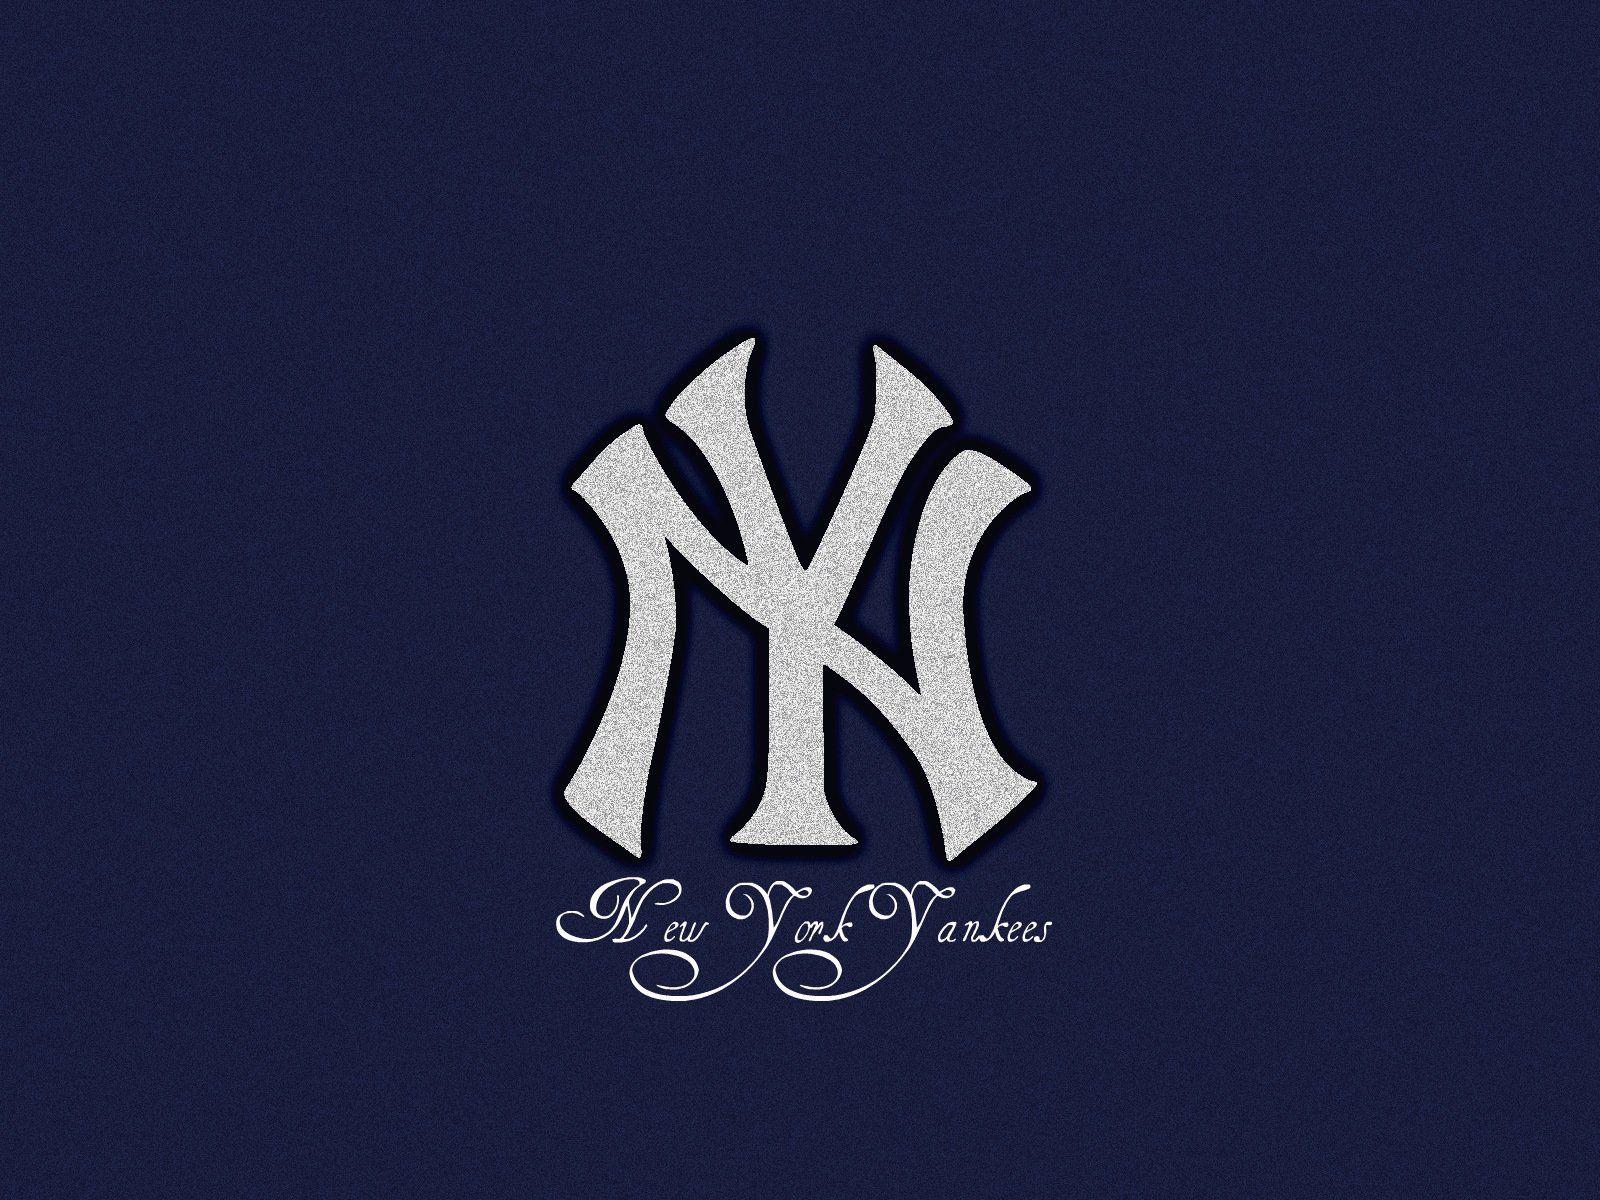 New York Yankees Wallpaper and Background Imagex800